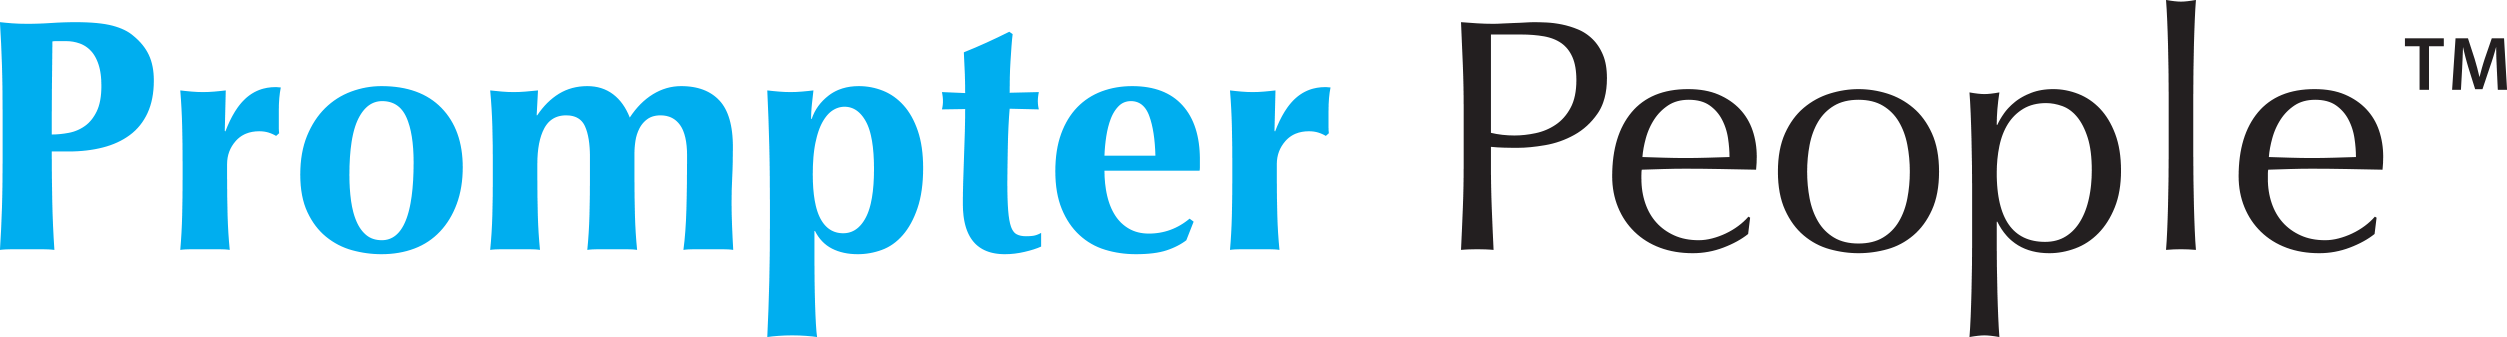 prompter-people-logo-300dpi.png